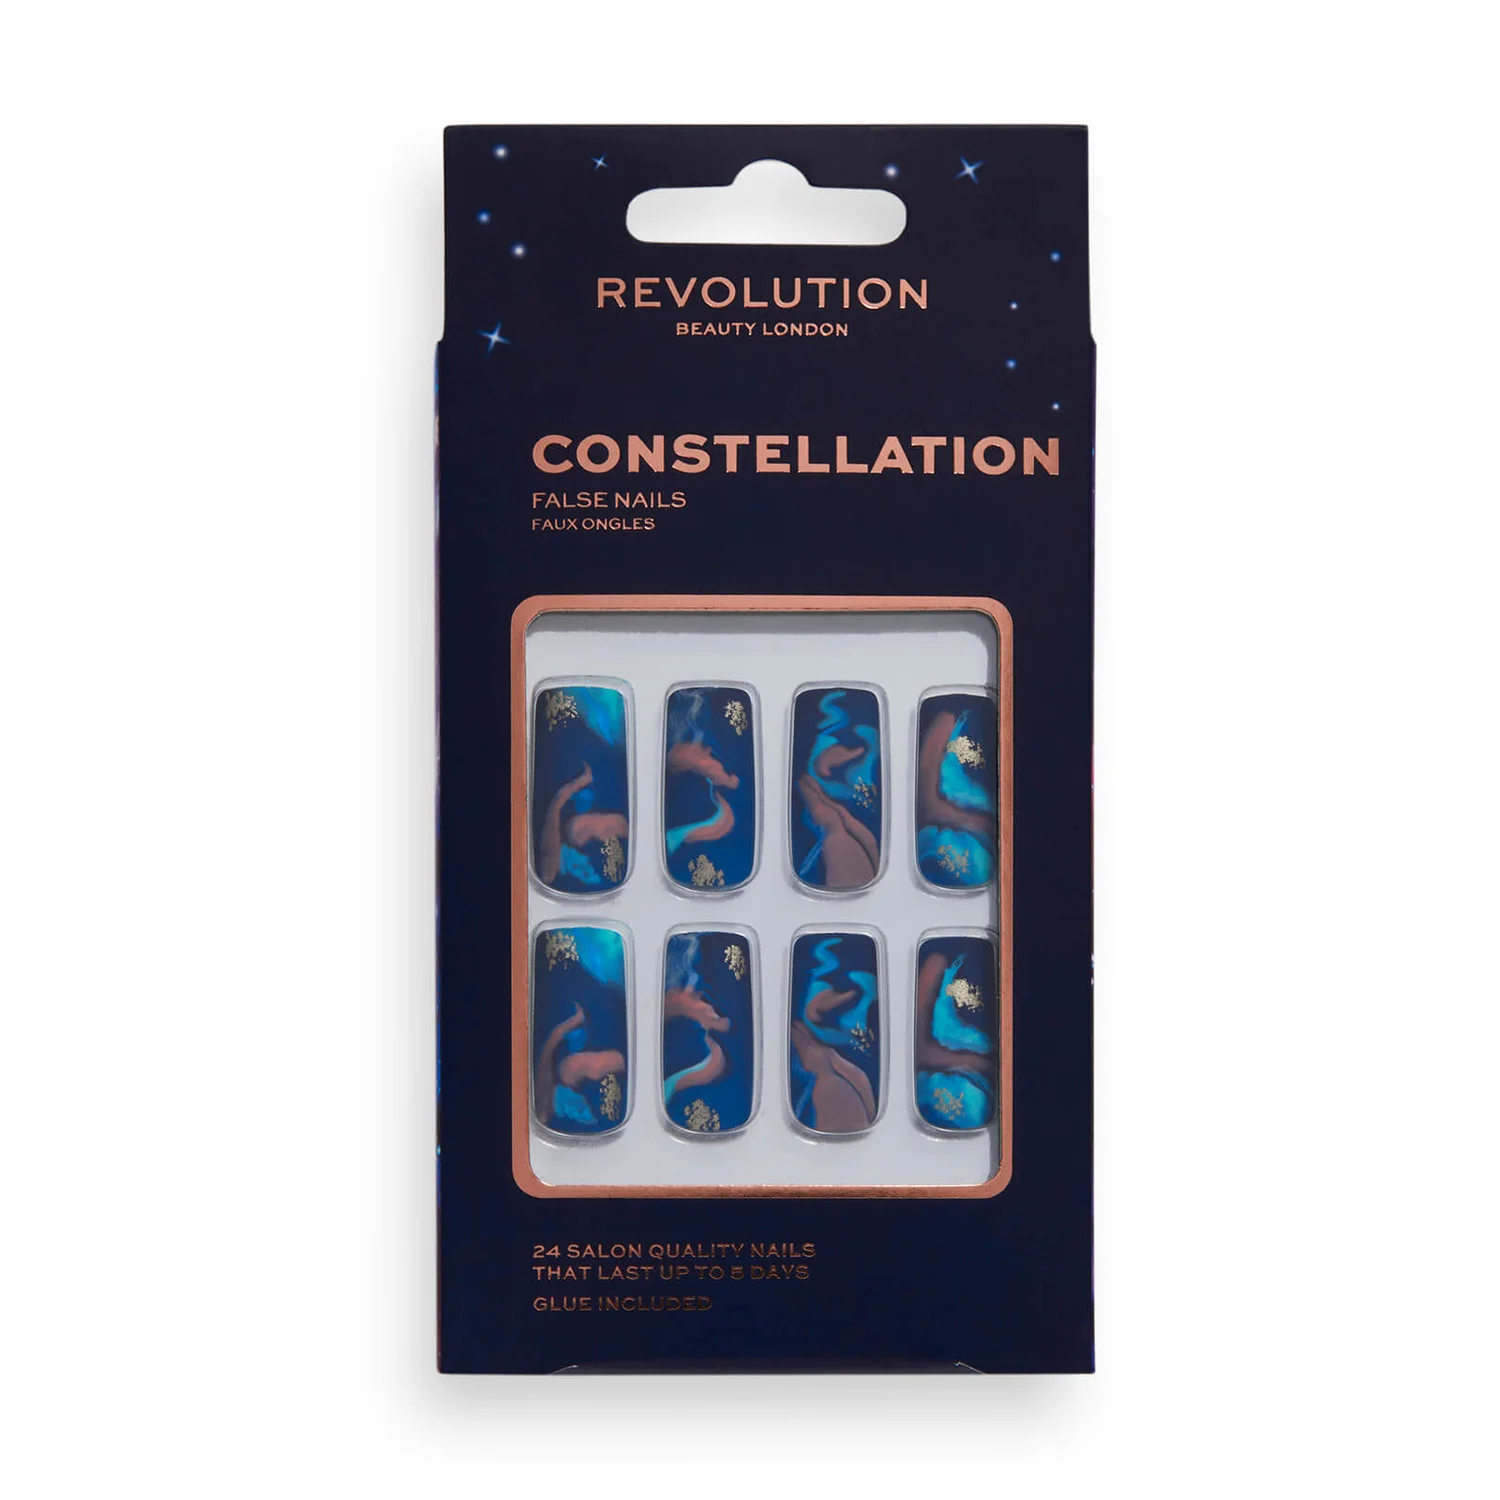 Makeup Revolution Flawless False Nails - Constellation